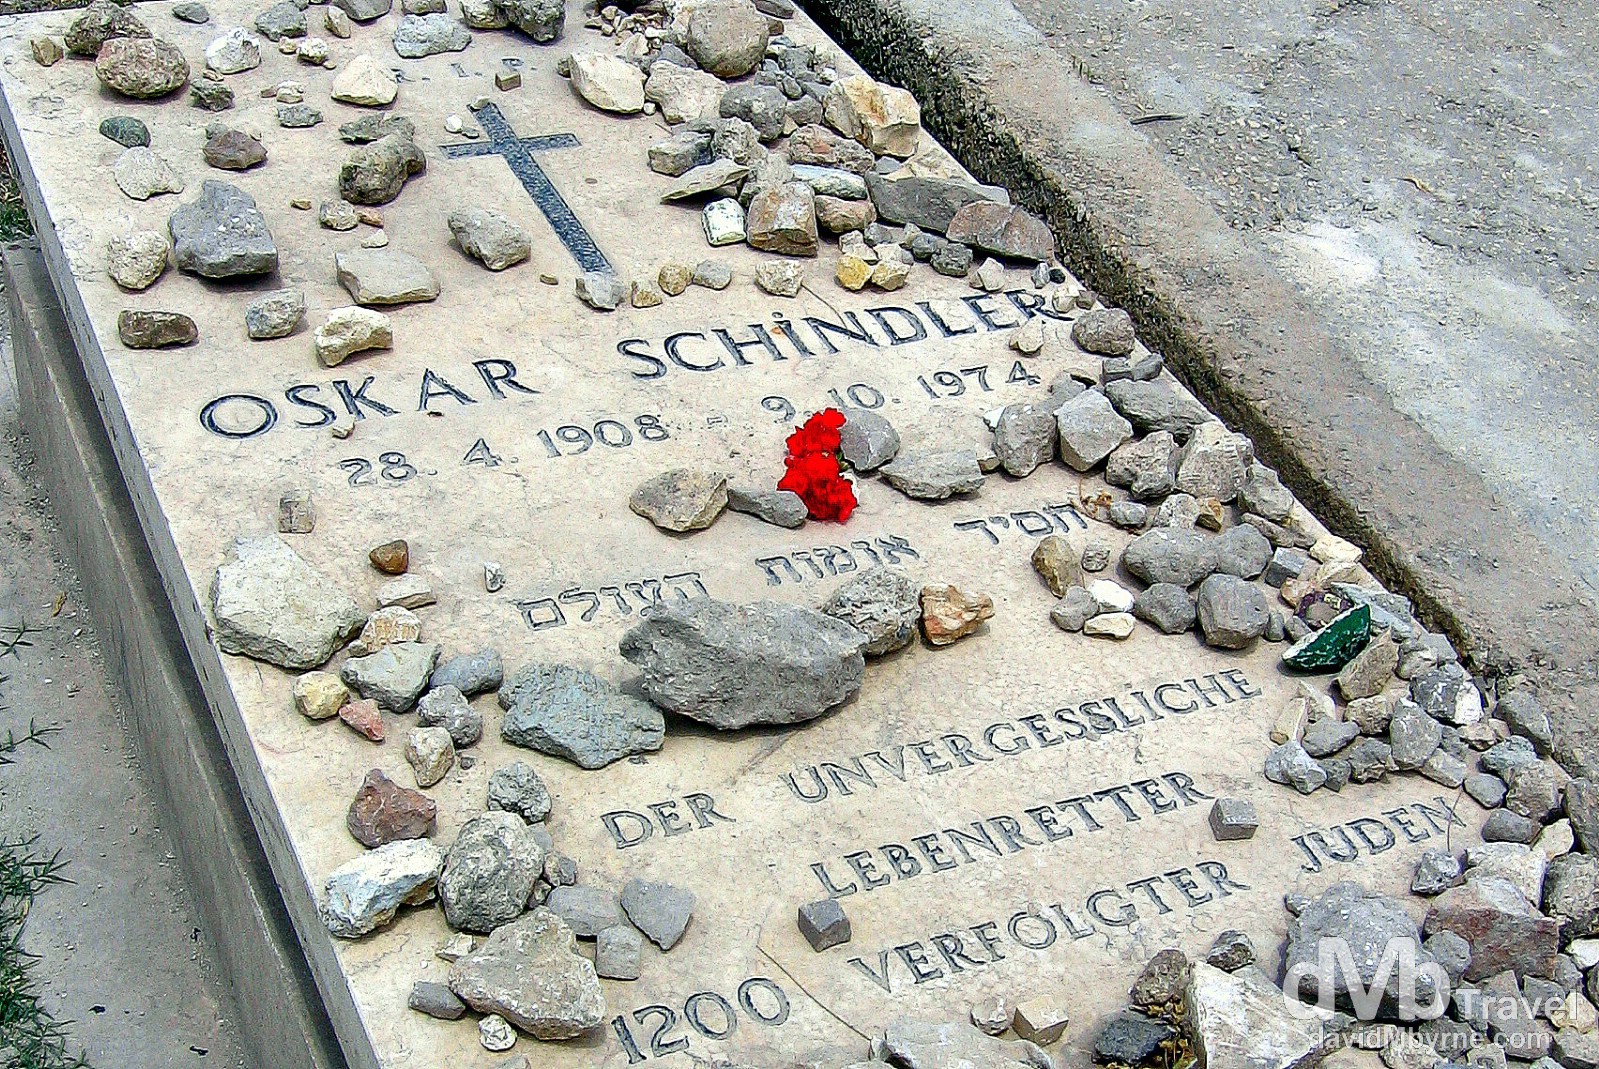 Oskar Schindler's grave in Mount Zion Catholic Cemetery, Jerusalem, Israel. May 1, 2008.